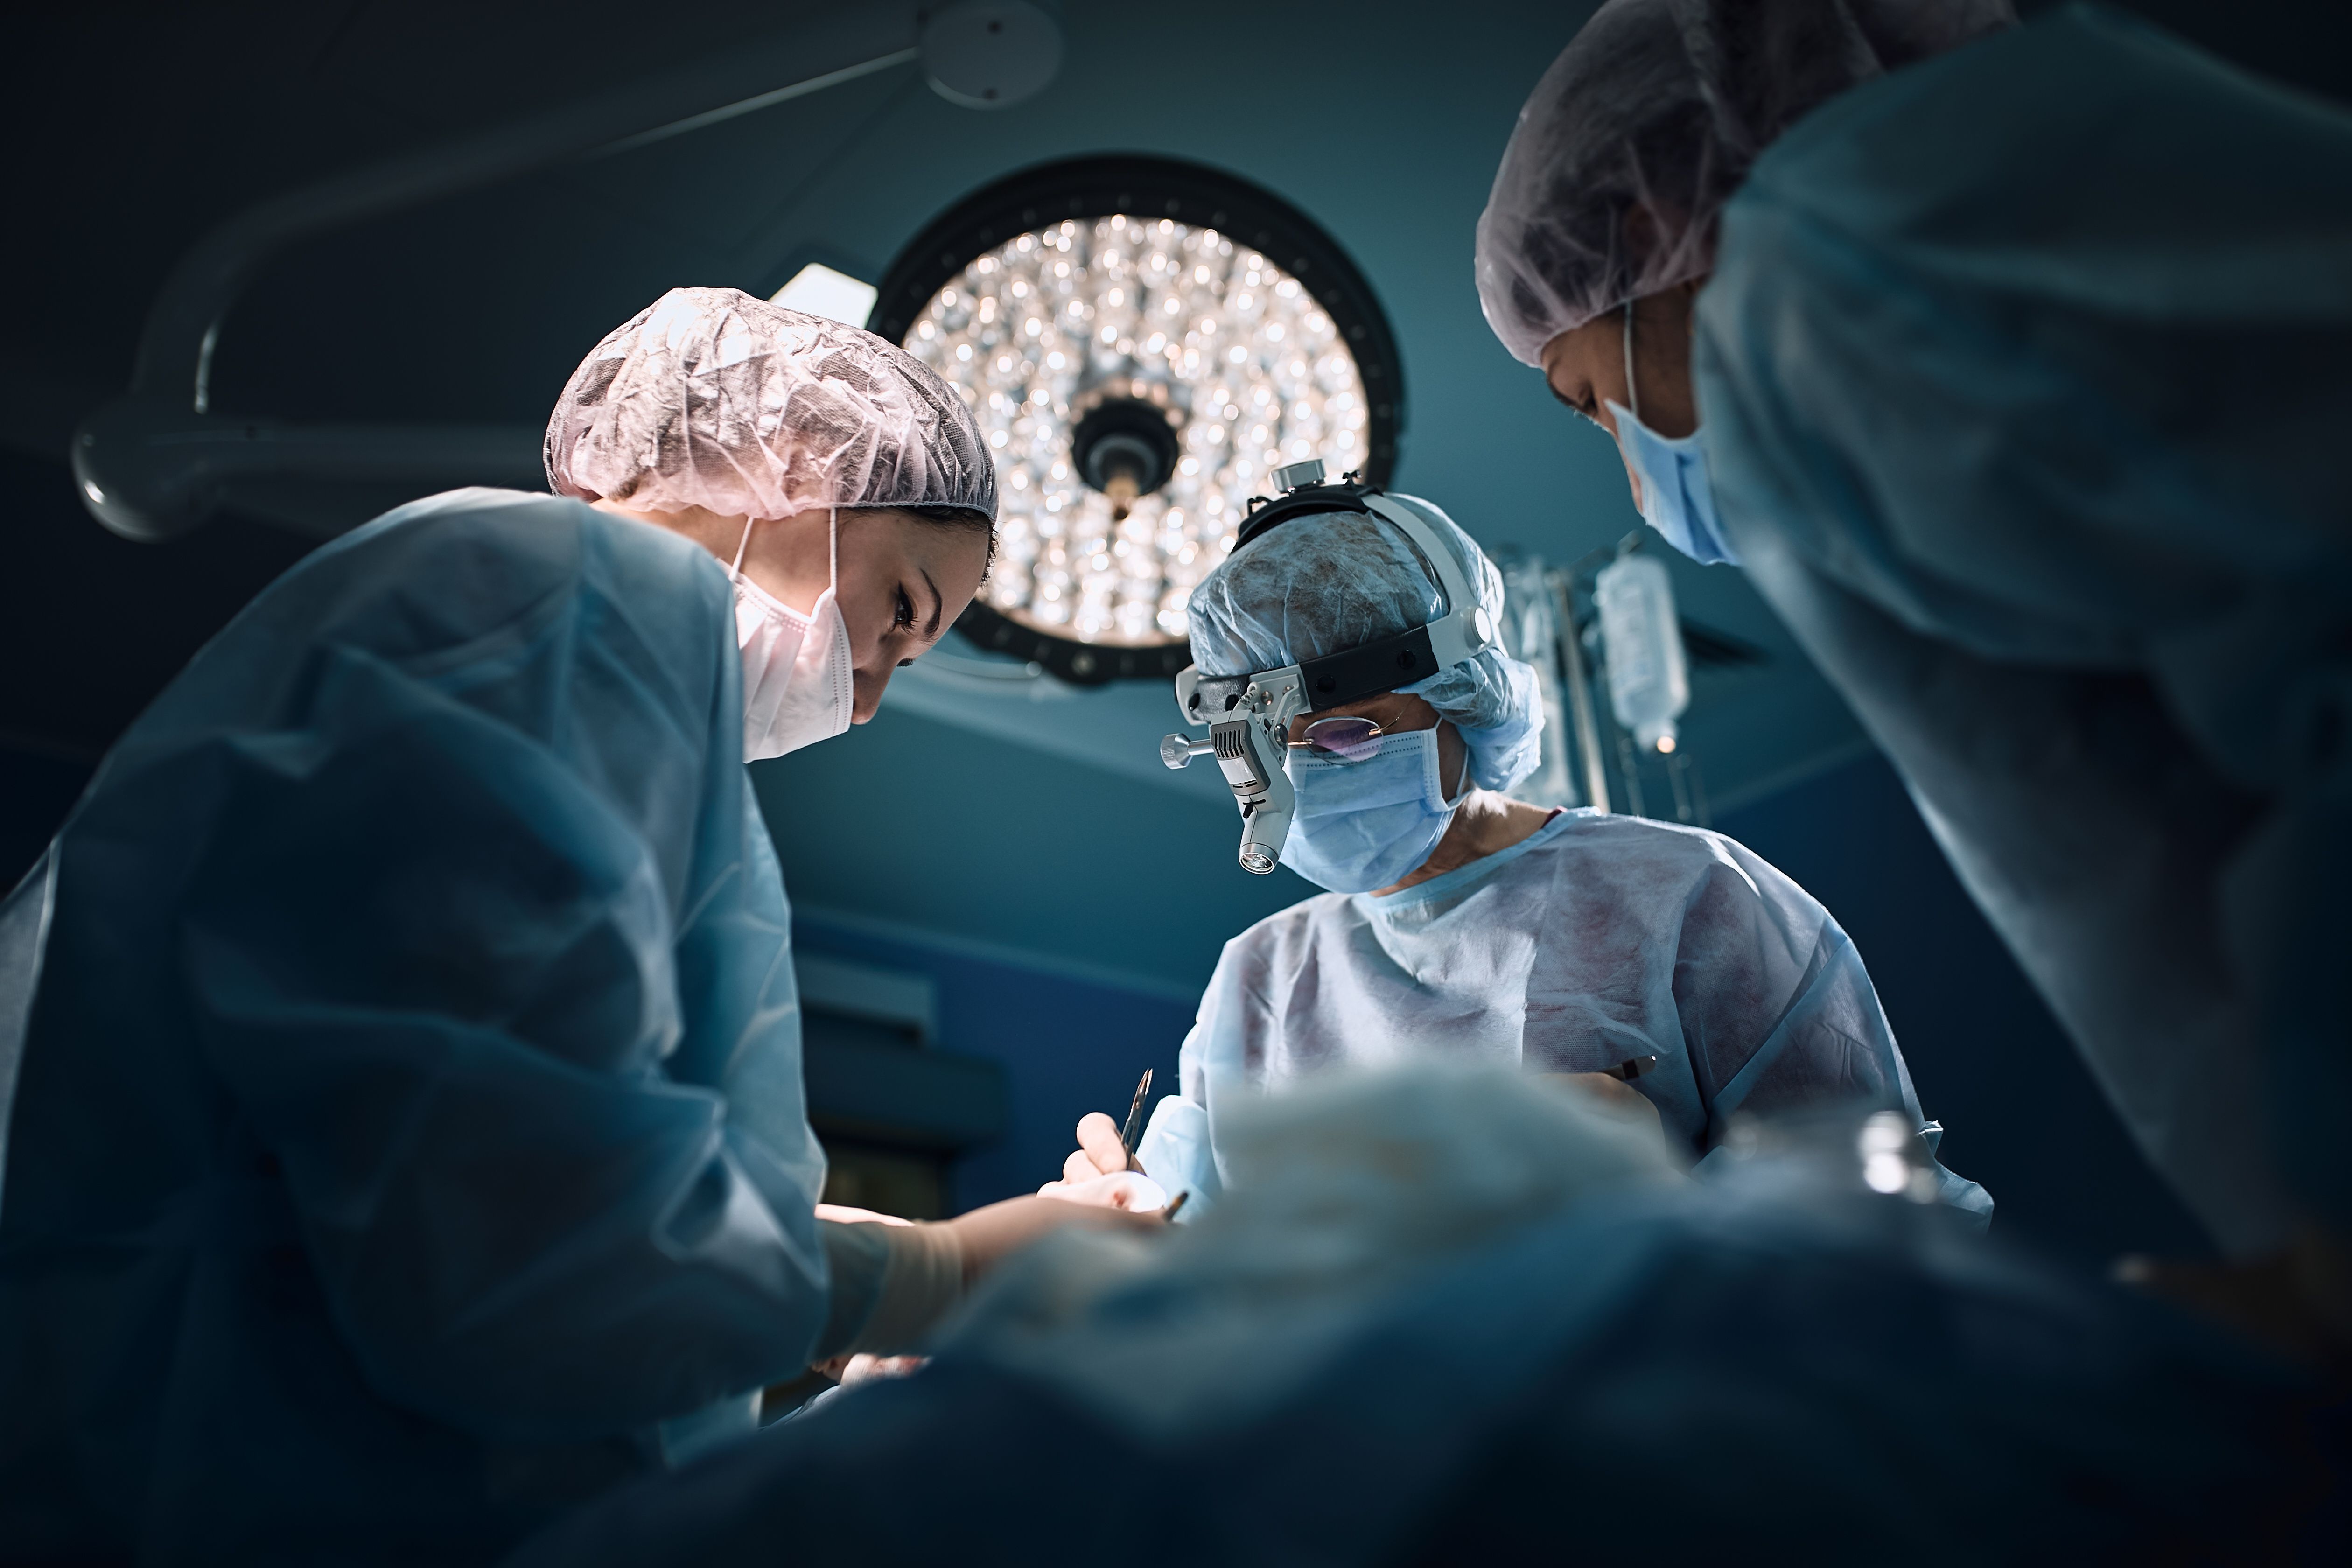 Medical team in operating room | Image Credit: Georgii - stock.adobe.com